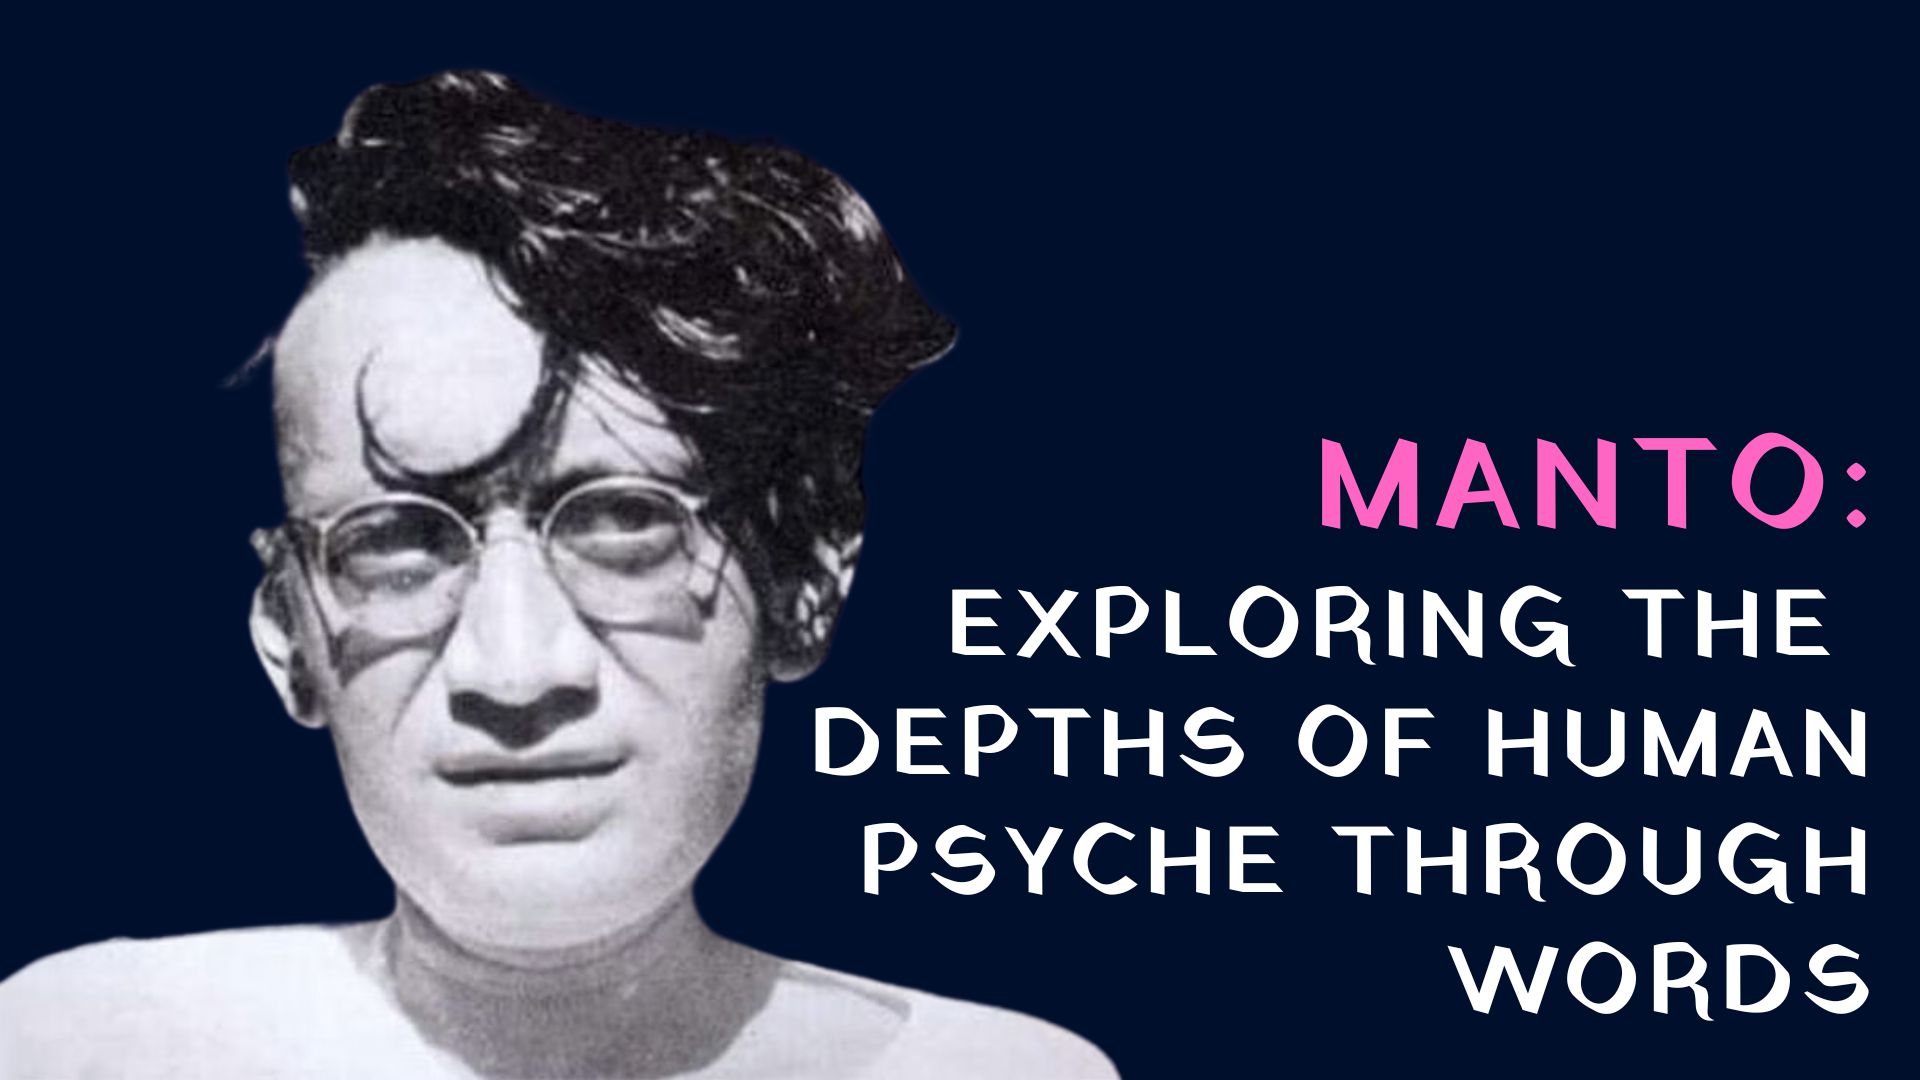 Saadat Hasan Manto: Exploring the Depths of Human Psyche through Words's image